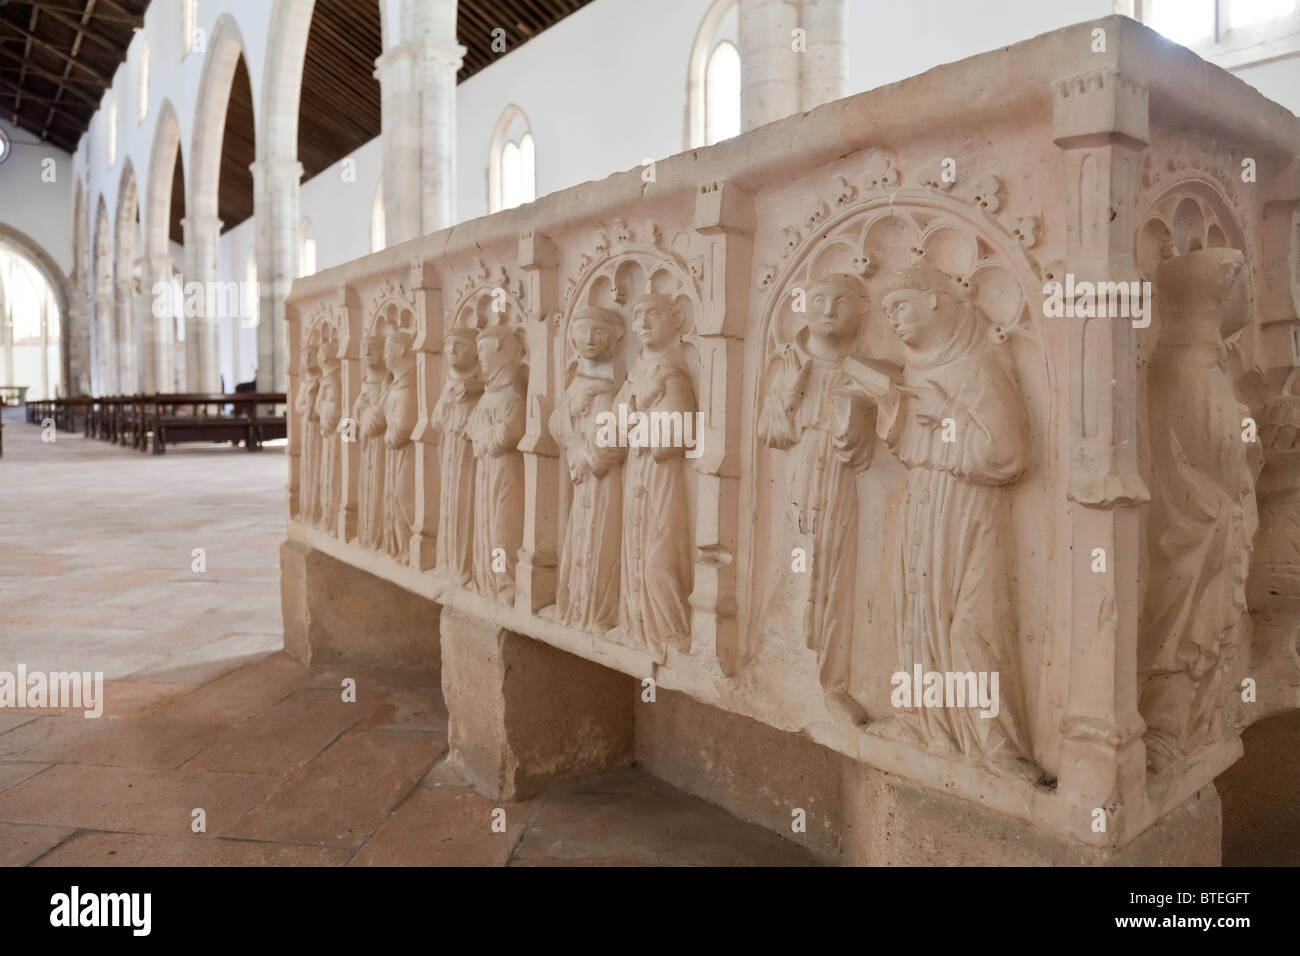 Santa Clara Church in the city of Santarém, Portugal. 13th century Mendicant Gothic Architecture. Stock Photo